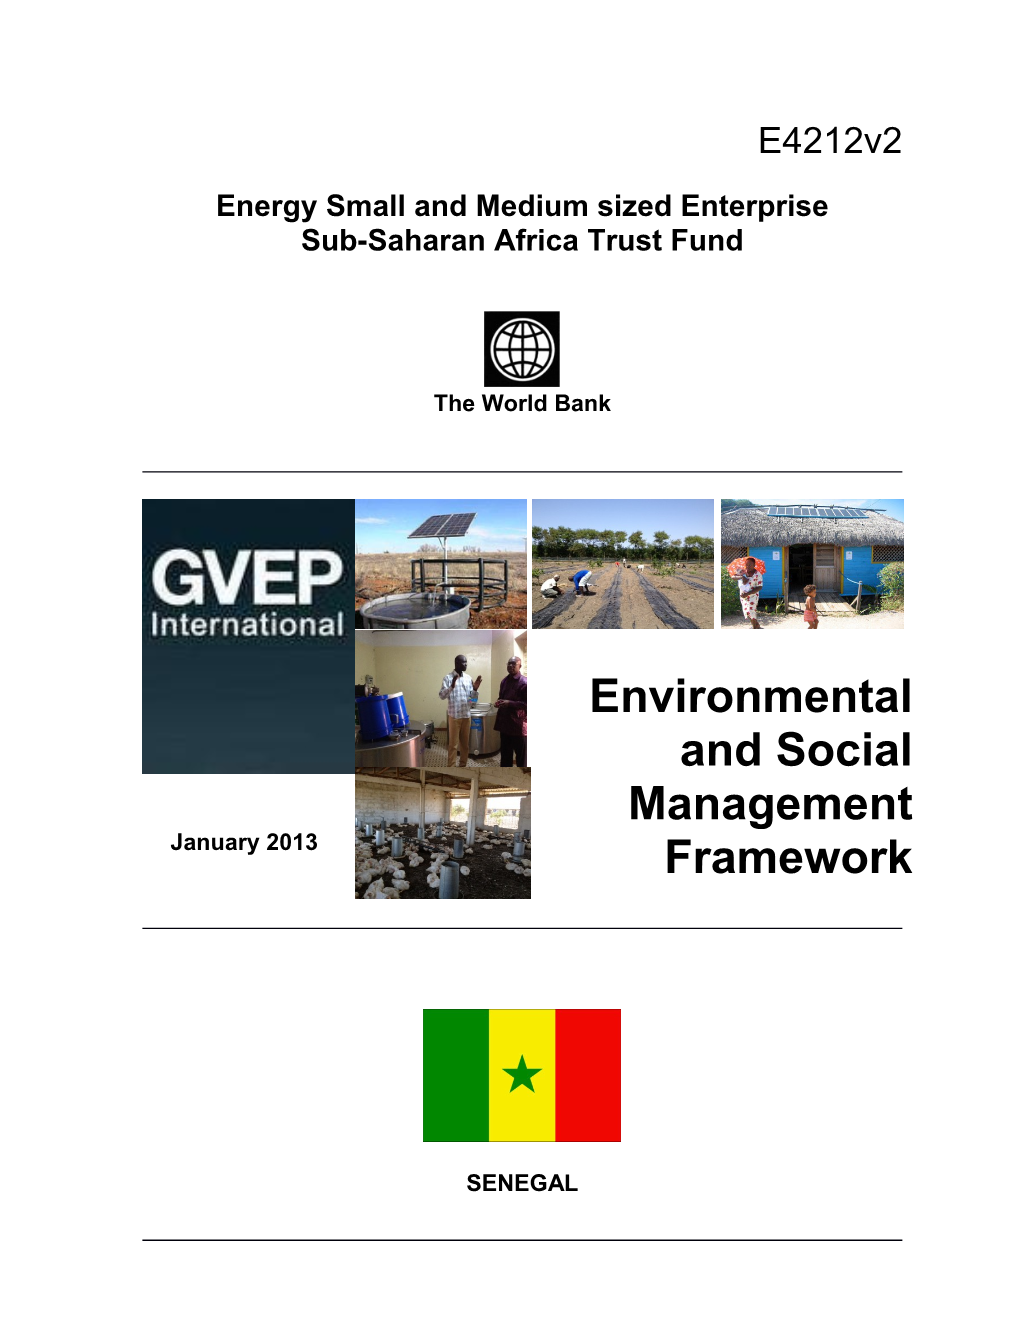 Energy SME TF Senegal ESMF